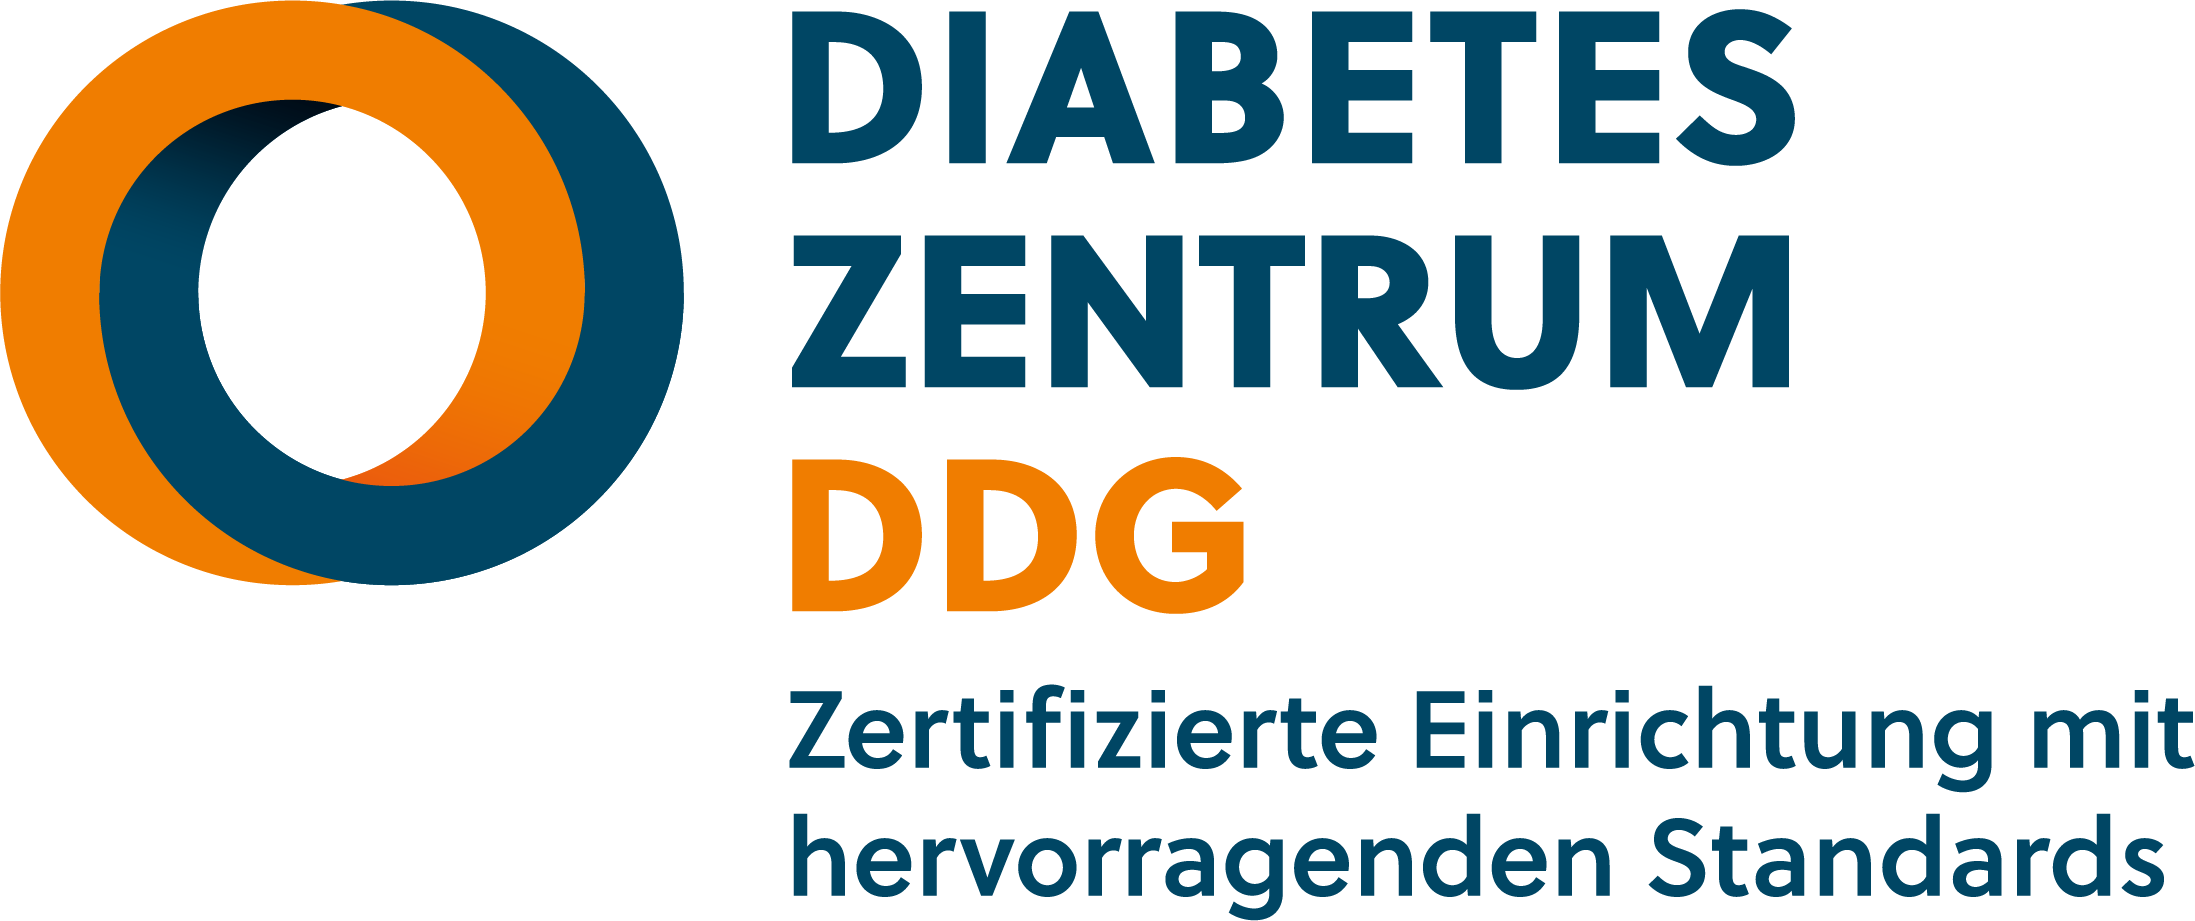 Das Diabeteszentrum Erfurt ist Zertifiziertes Diabeteszentrum DDG.